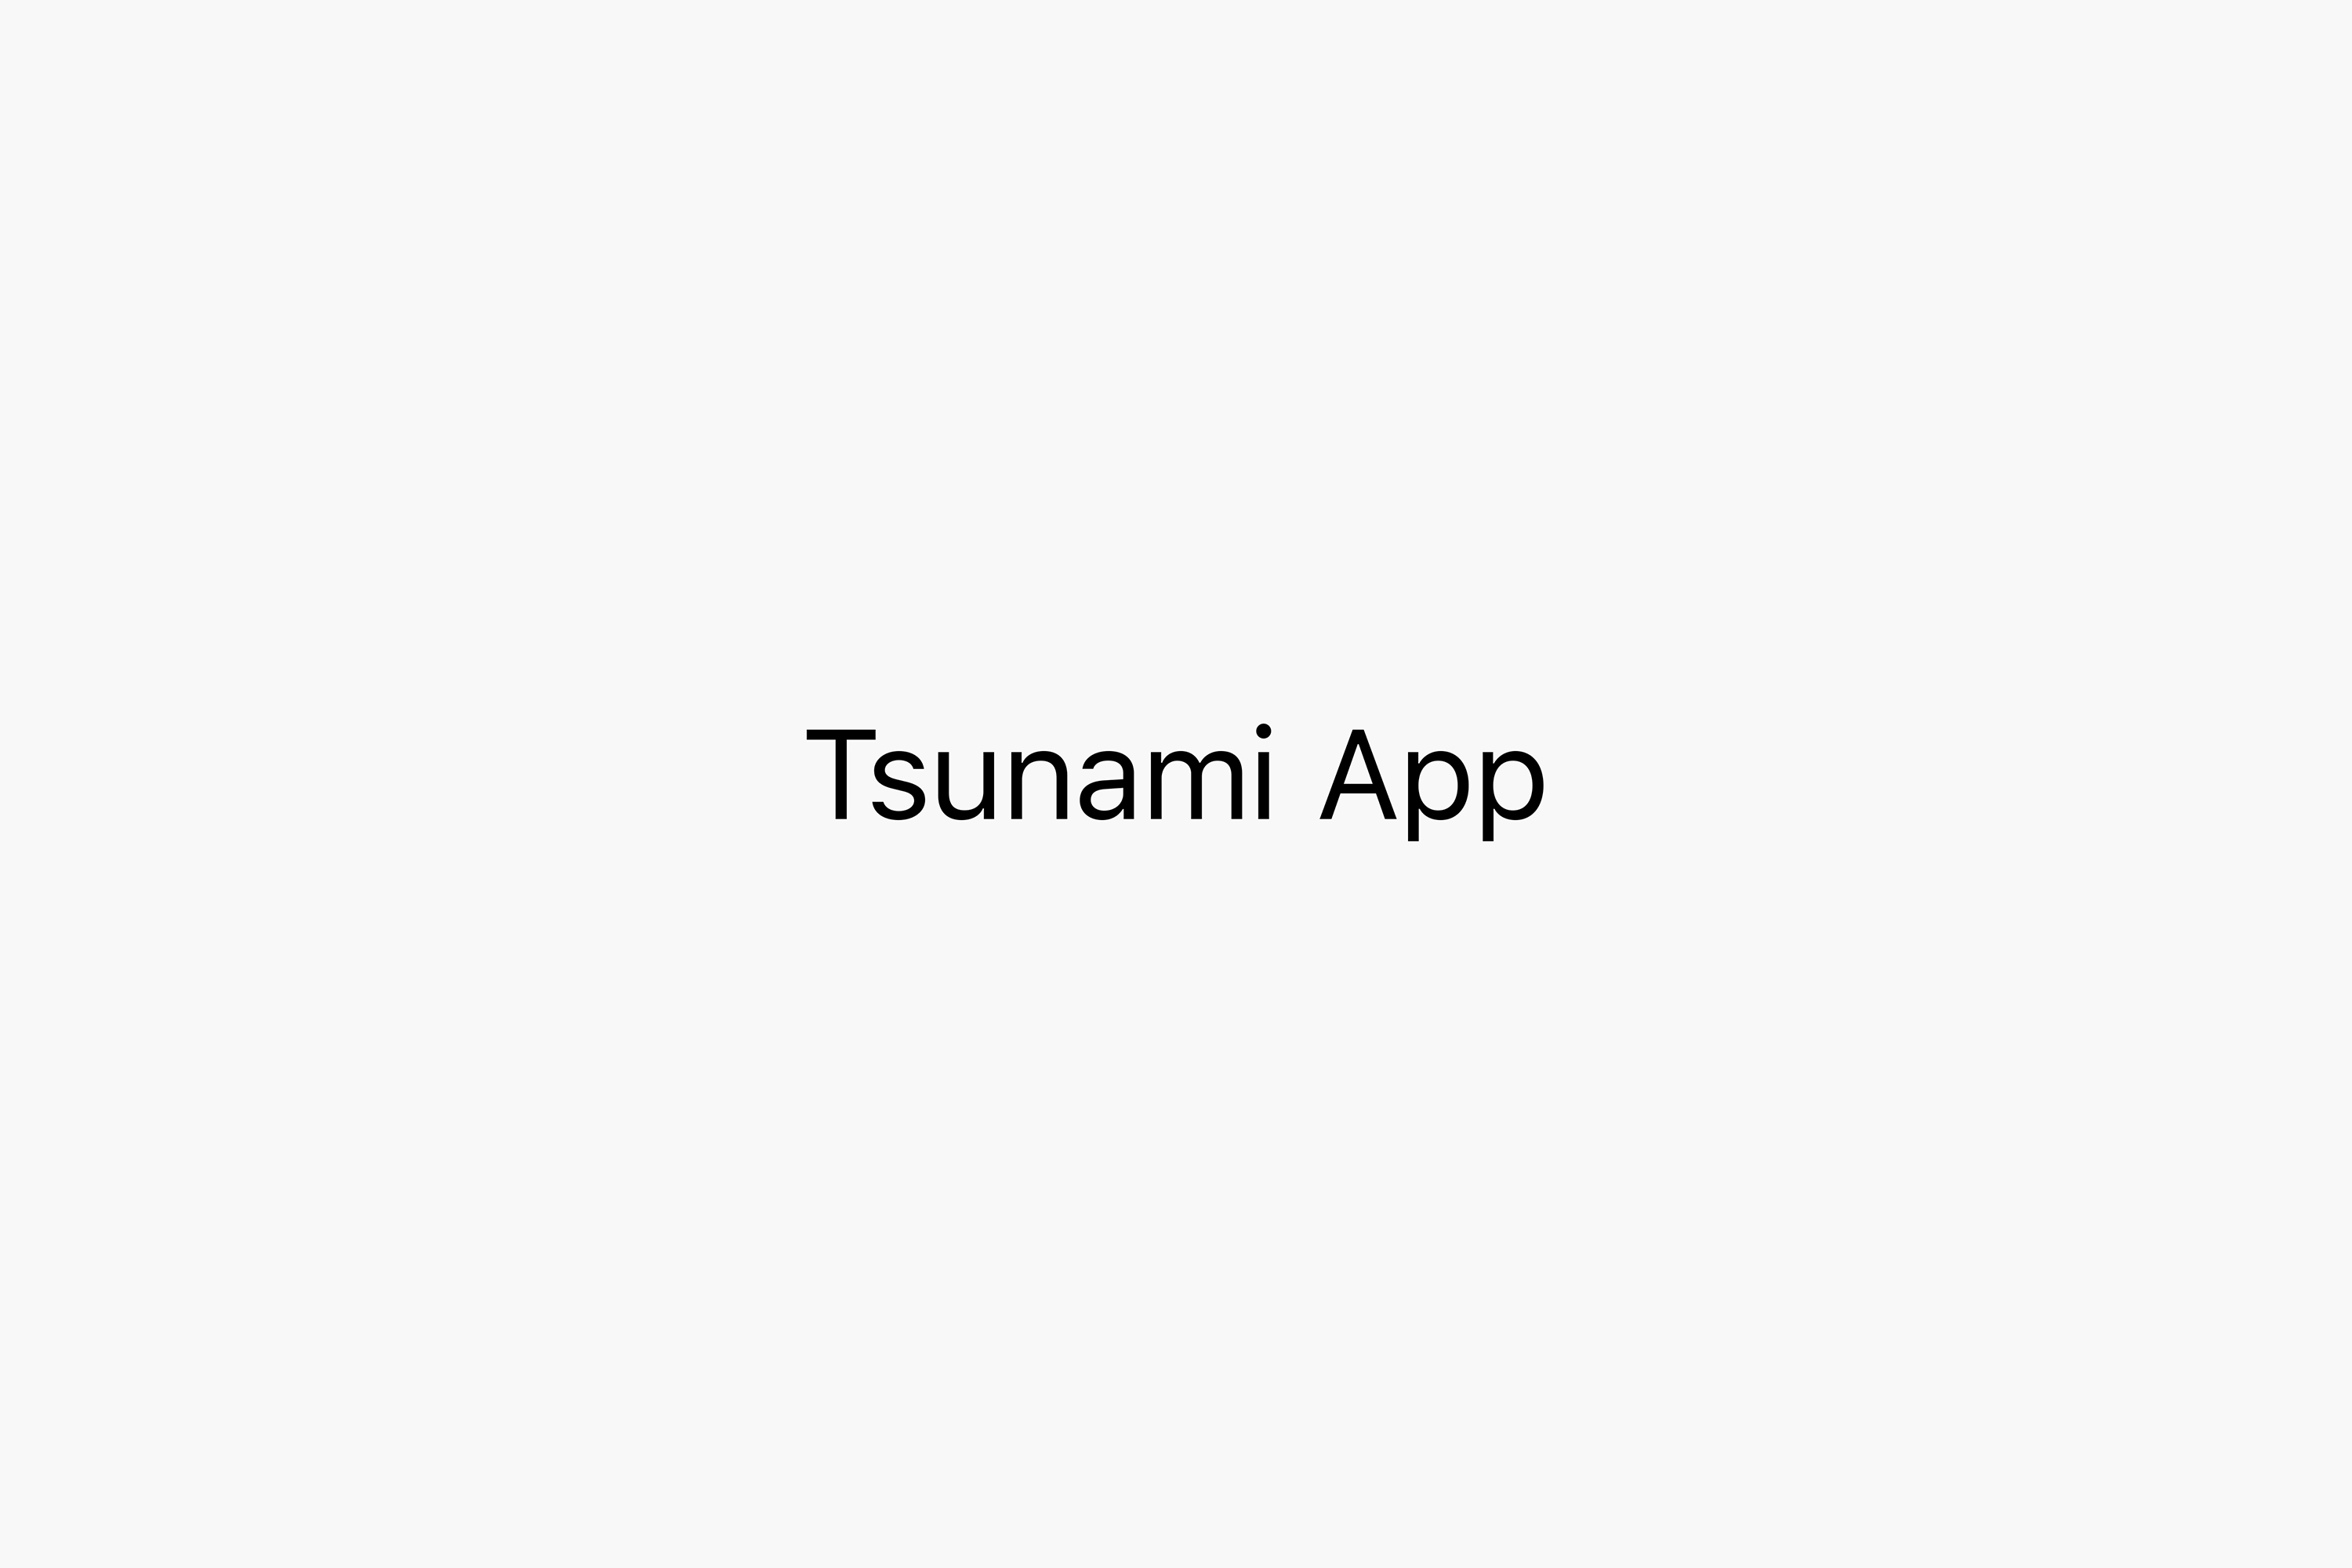 tsunami_app_logotype